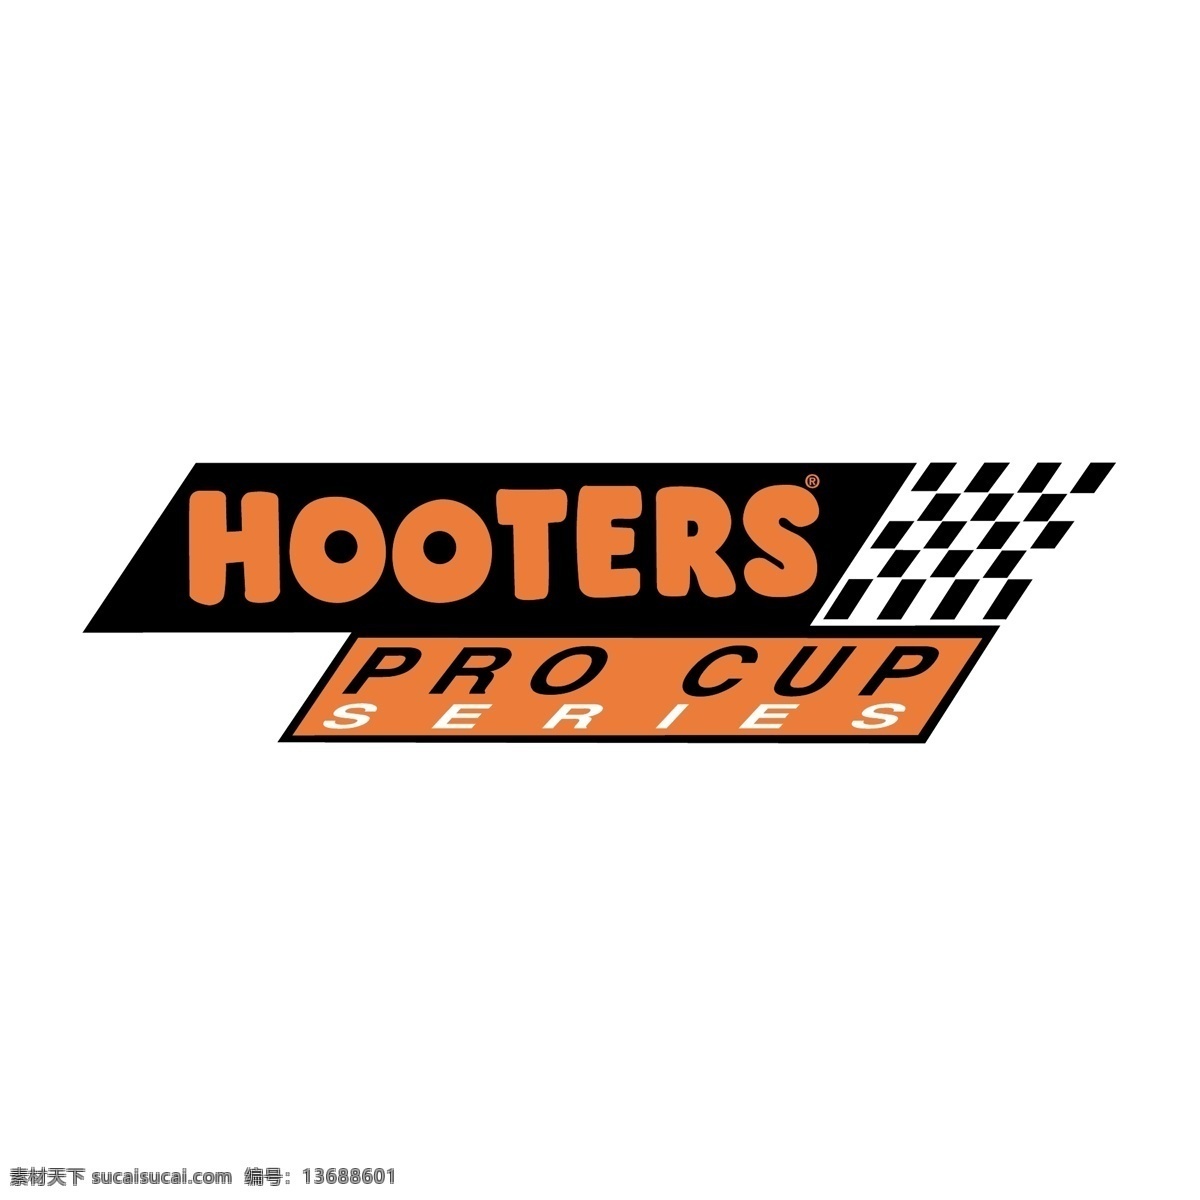 hoooters 自由 procup 赛车 标识 psd源文件 logo设计